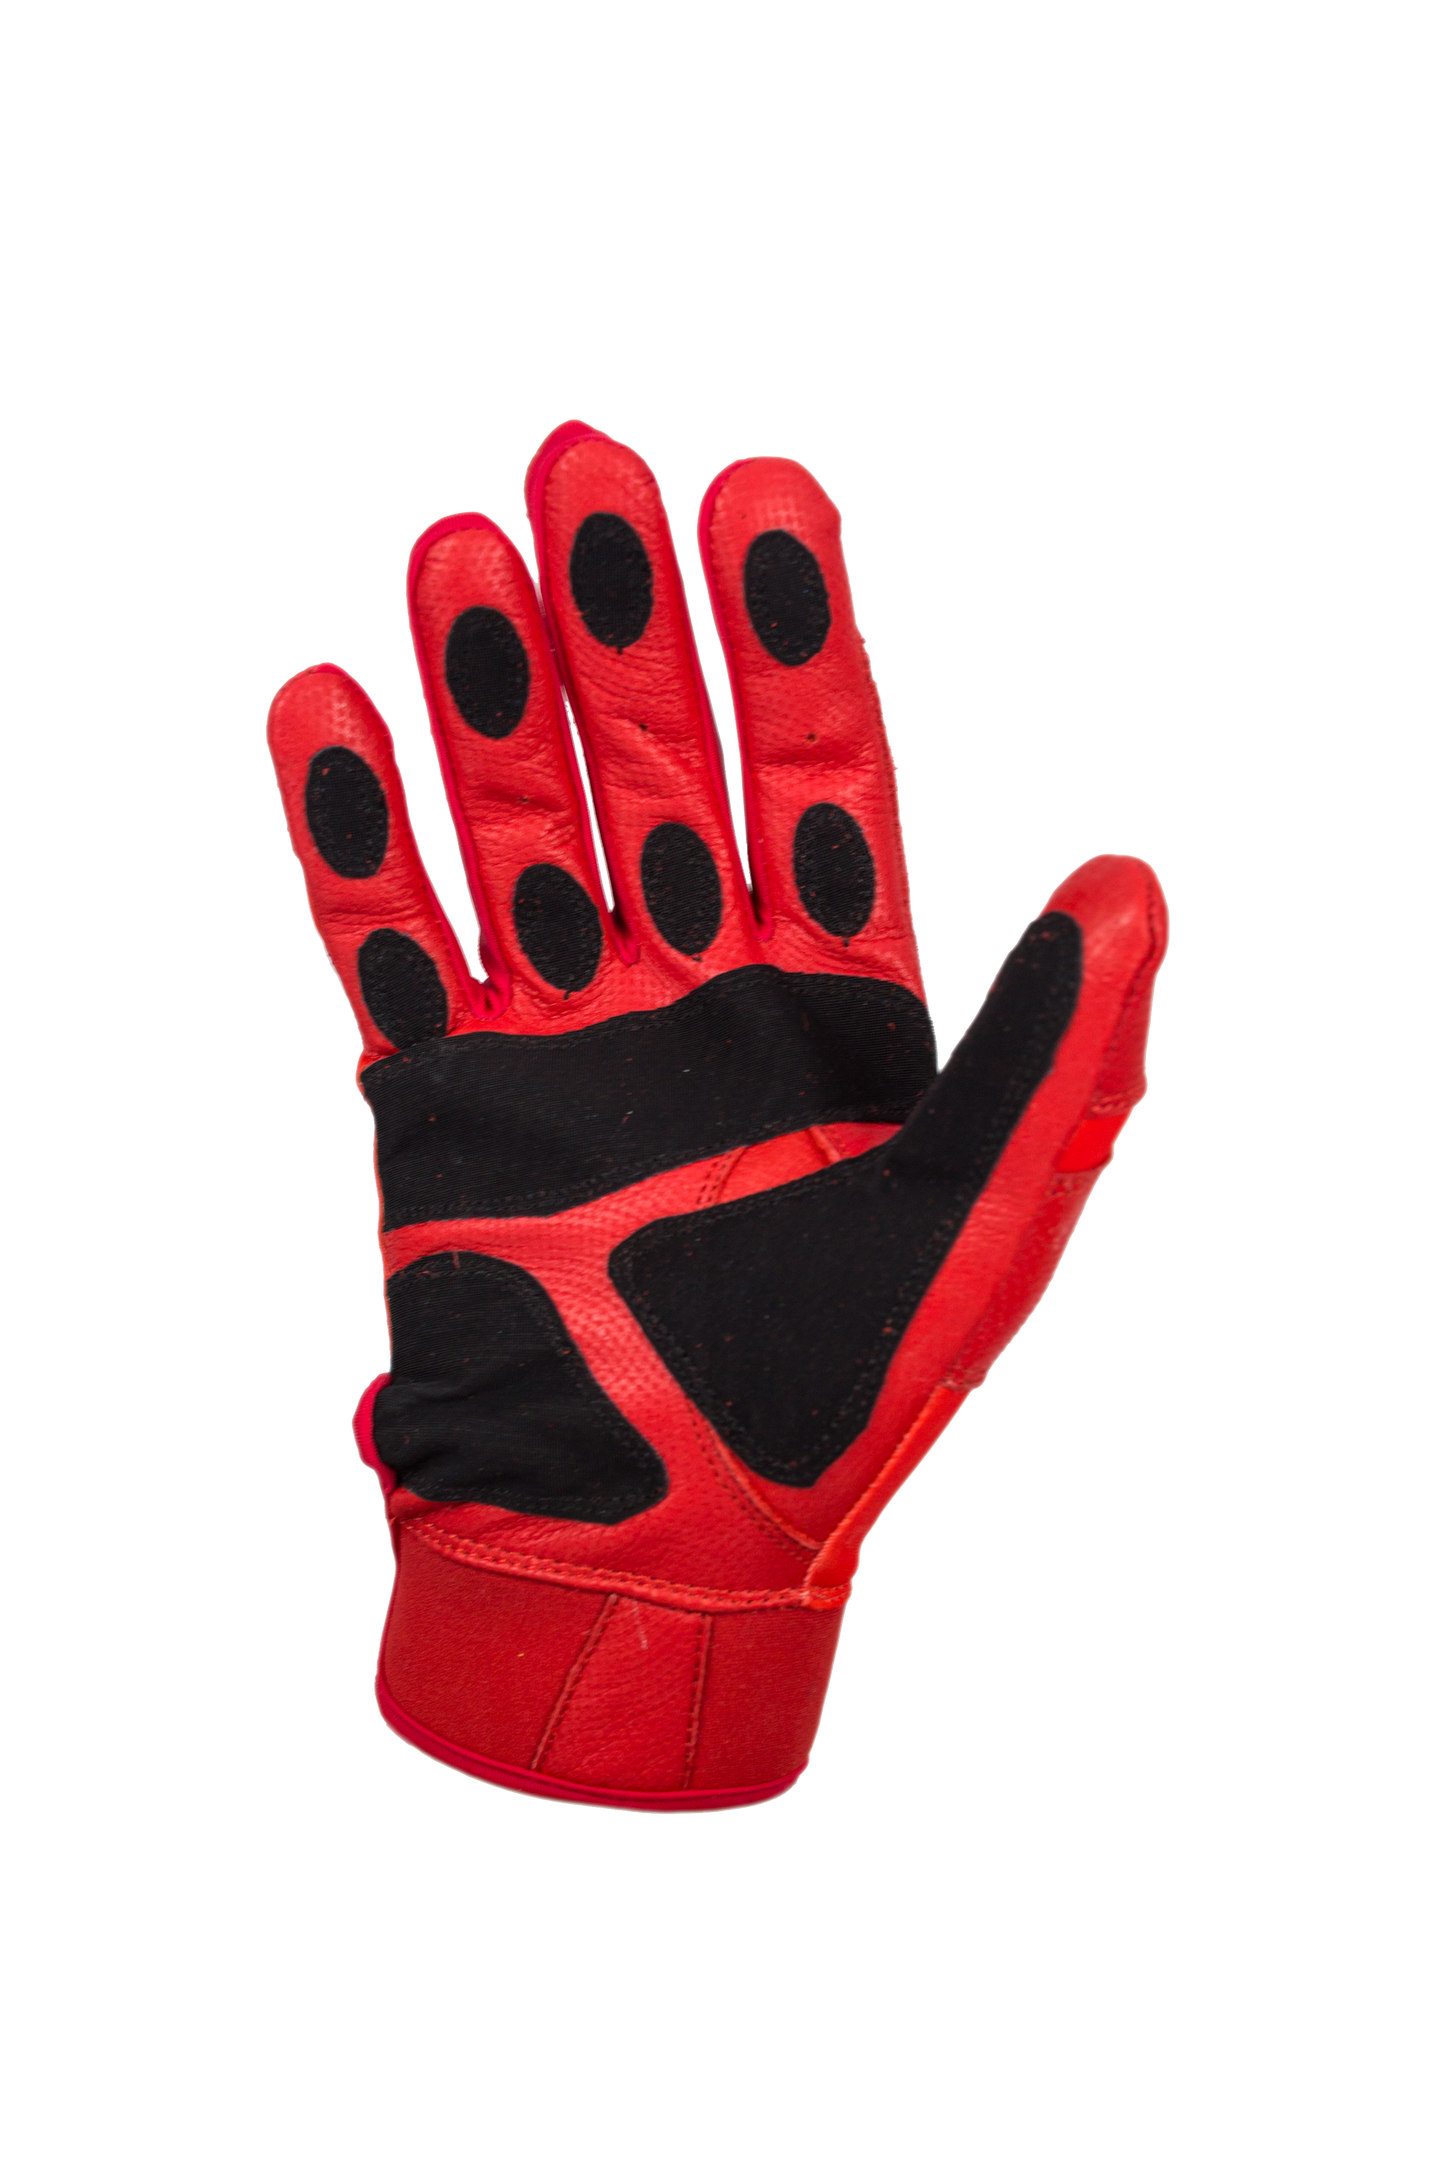 Howler Red Baseball & Softball Batting Gloves Palm View